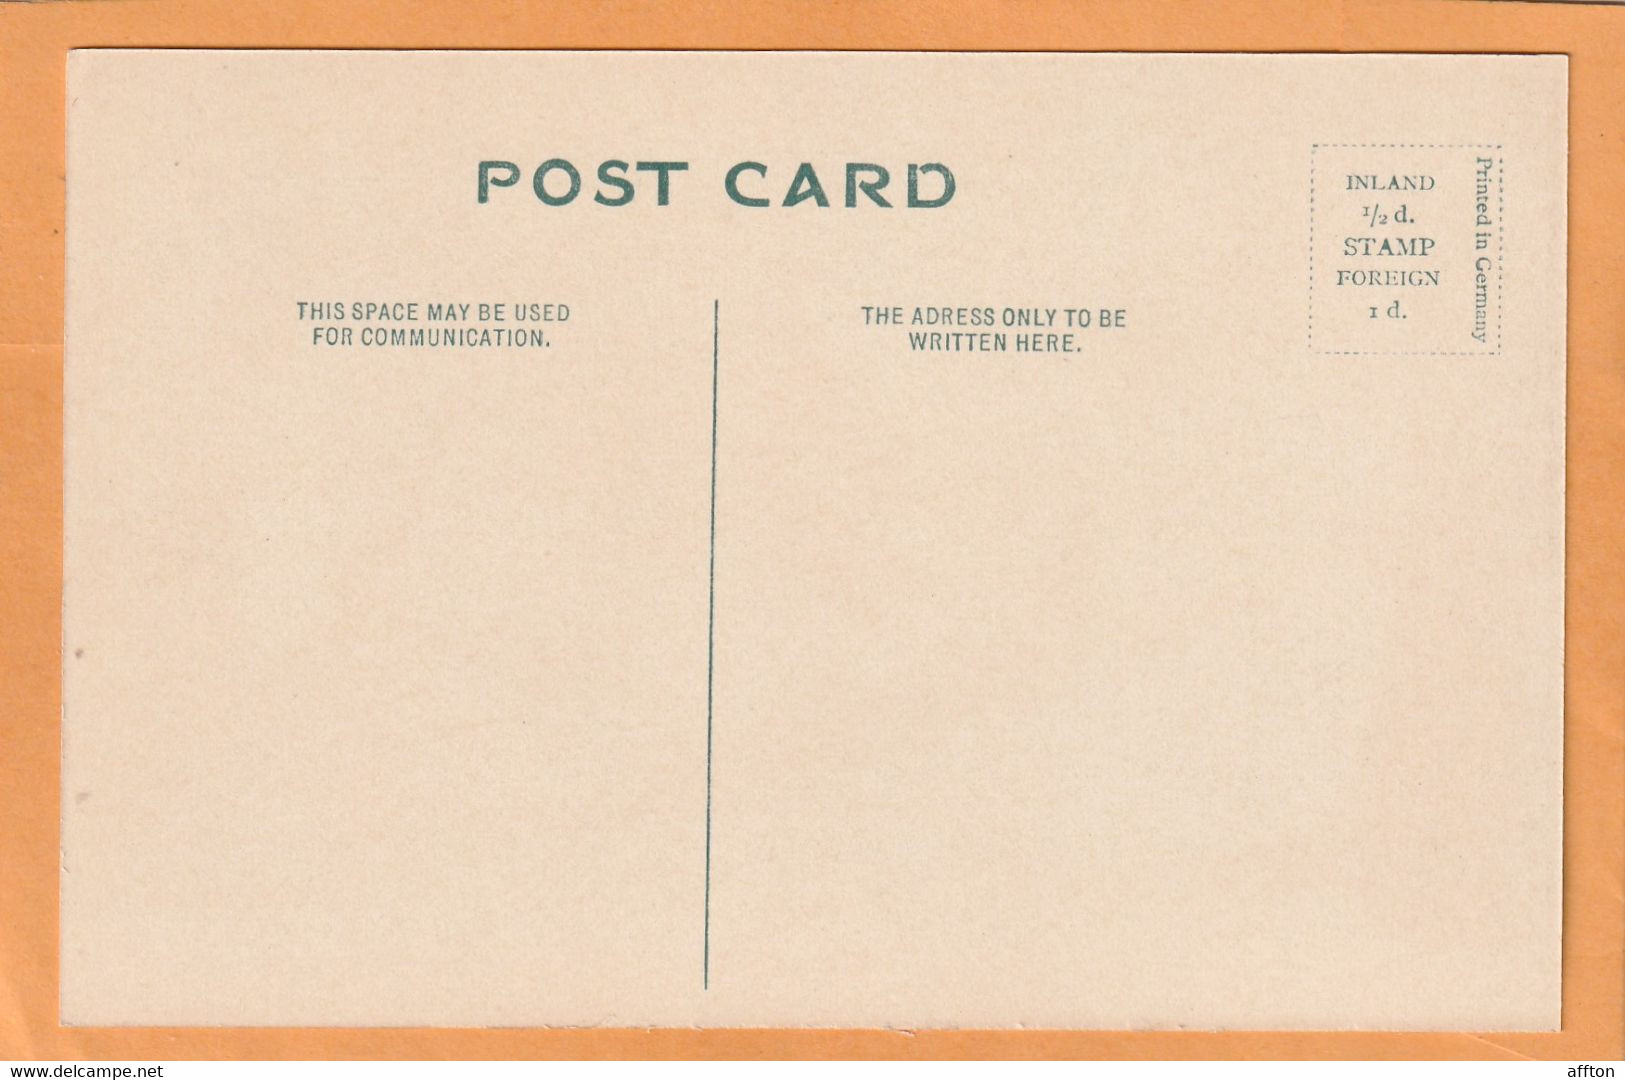 Ambleside UK 1905 Postcard - Ambleside